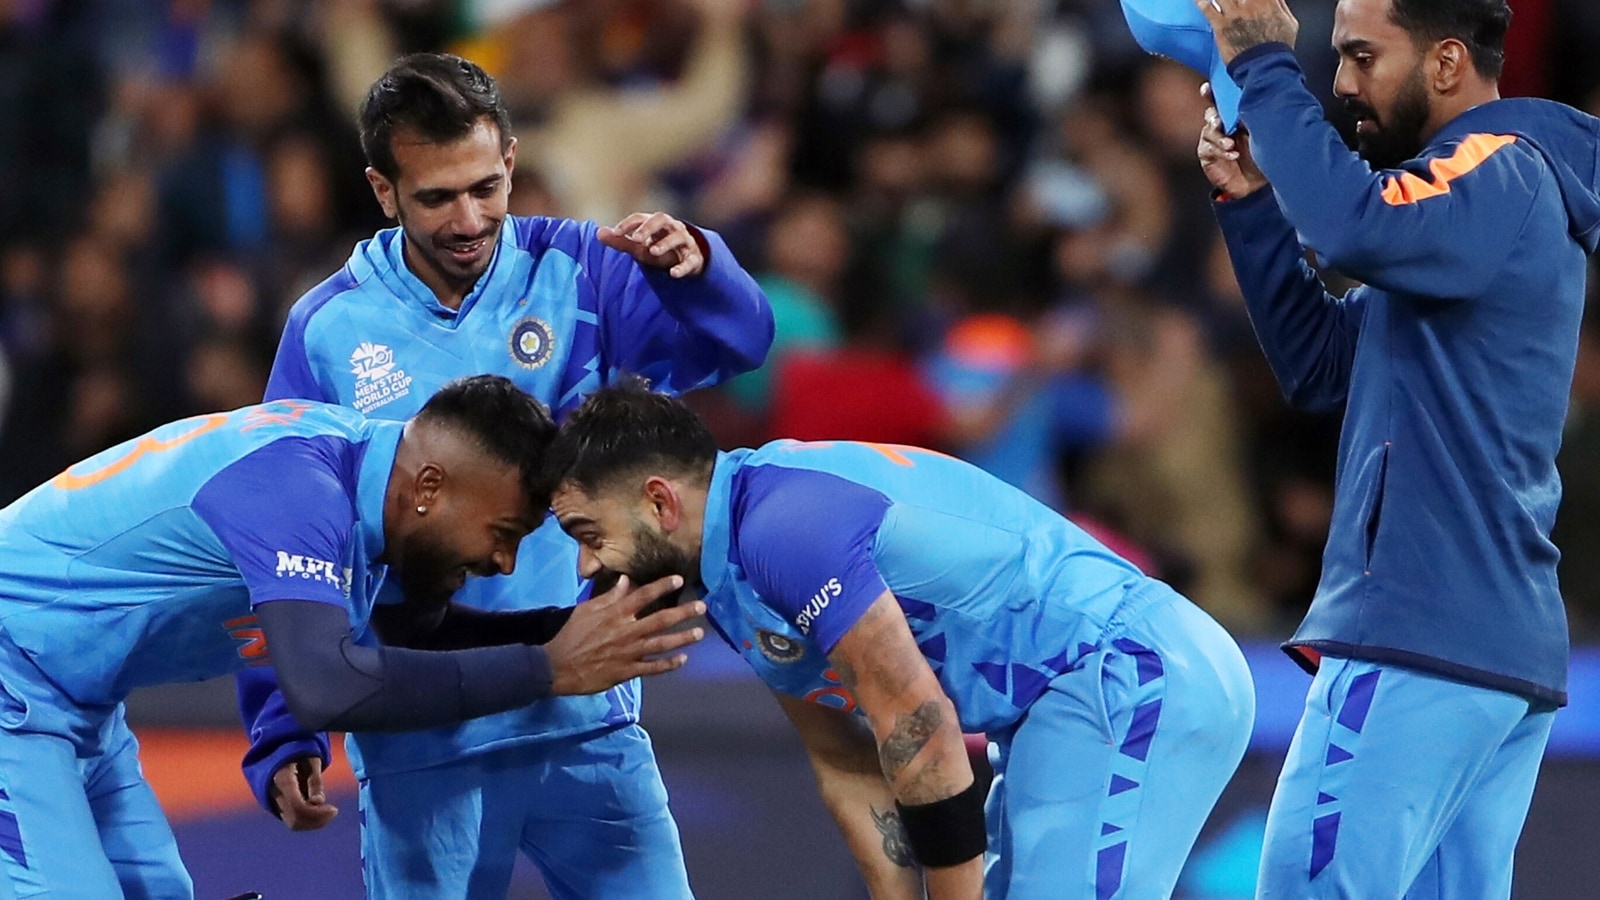 Watch Kohli's tearyeyed, emotional celebration touches hearts after